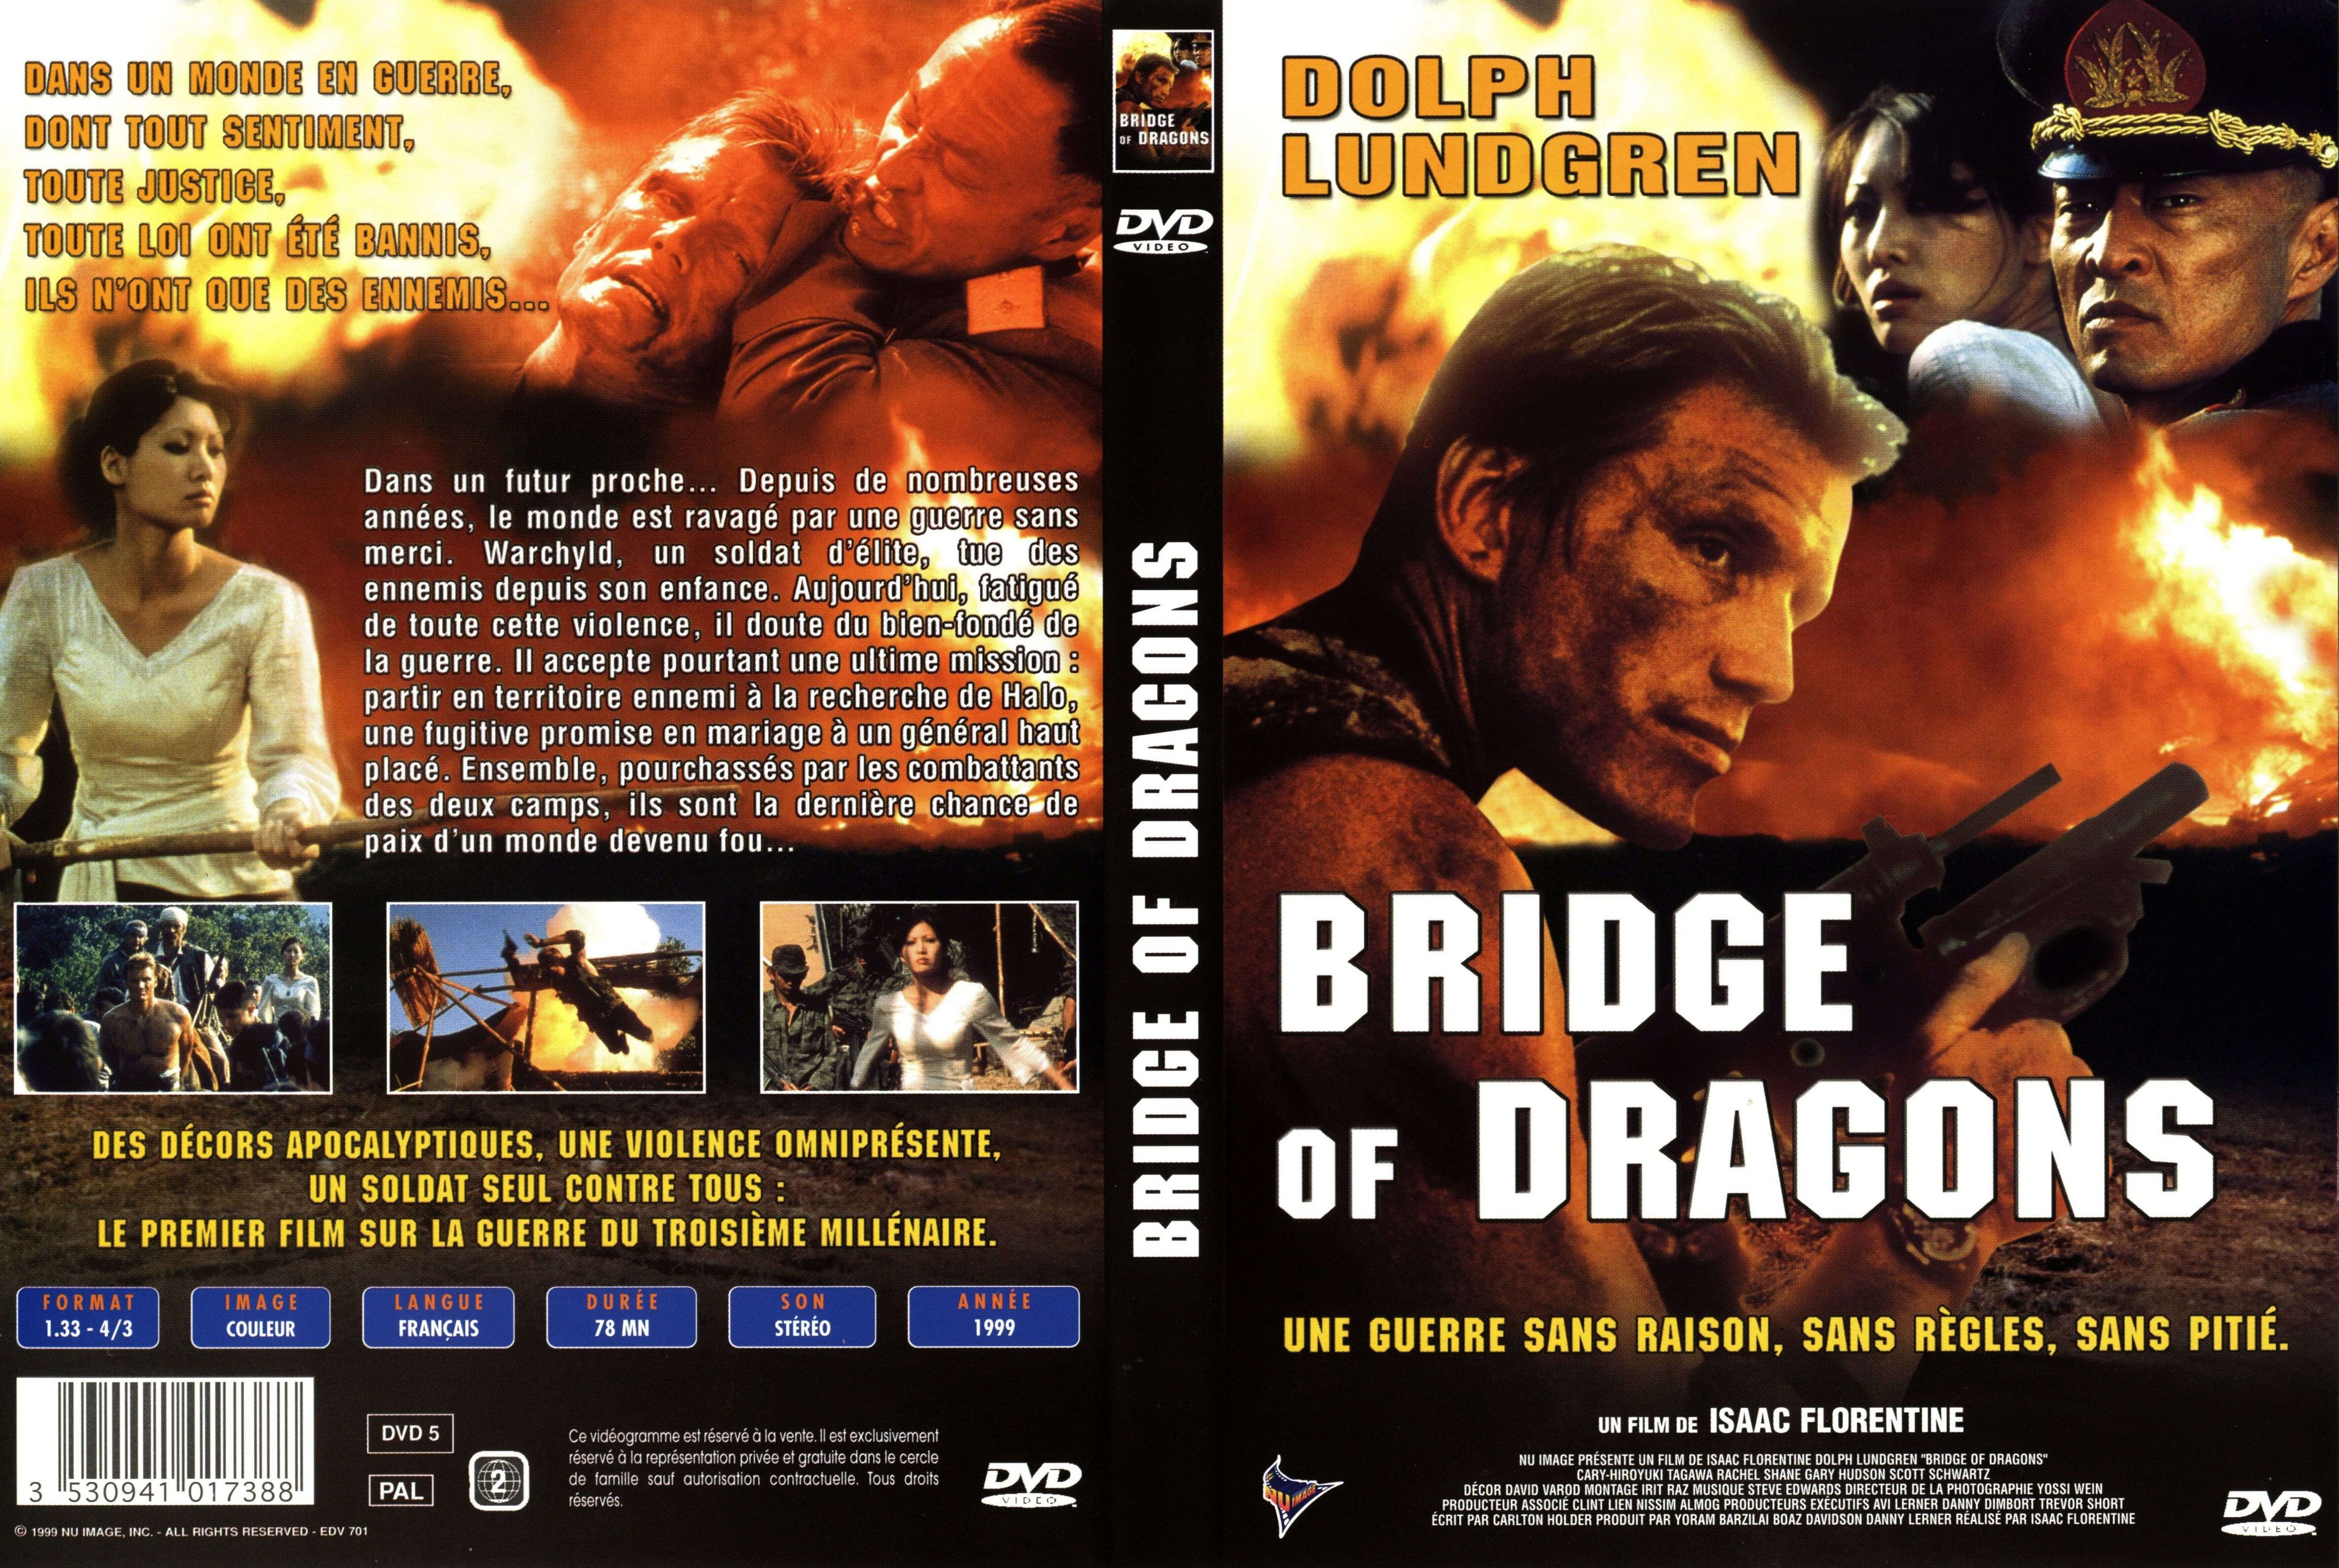 Jaquette DVD Bridge of dragons